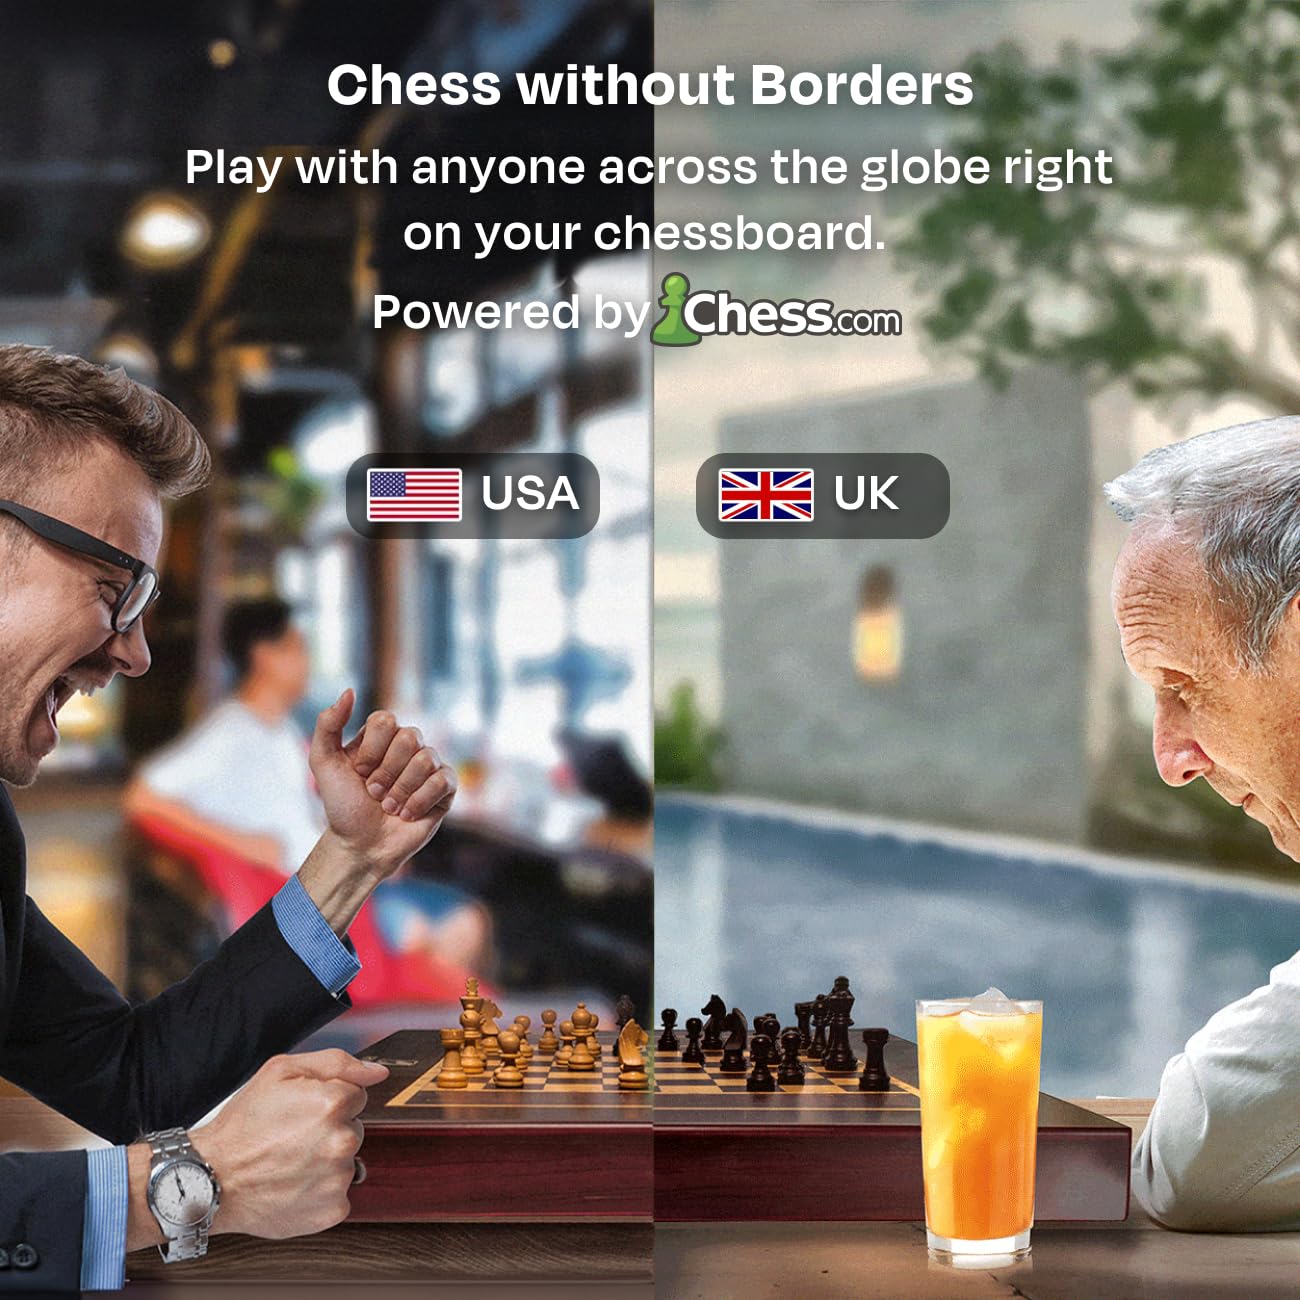 Your Ultimate AI Chess Companion